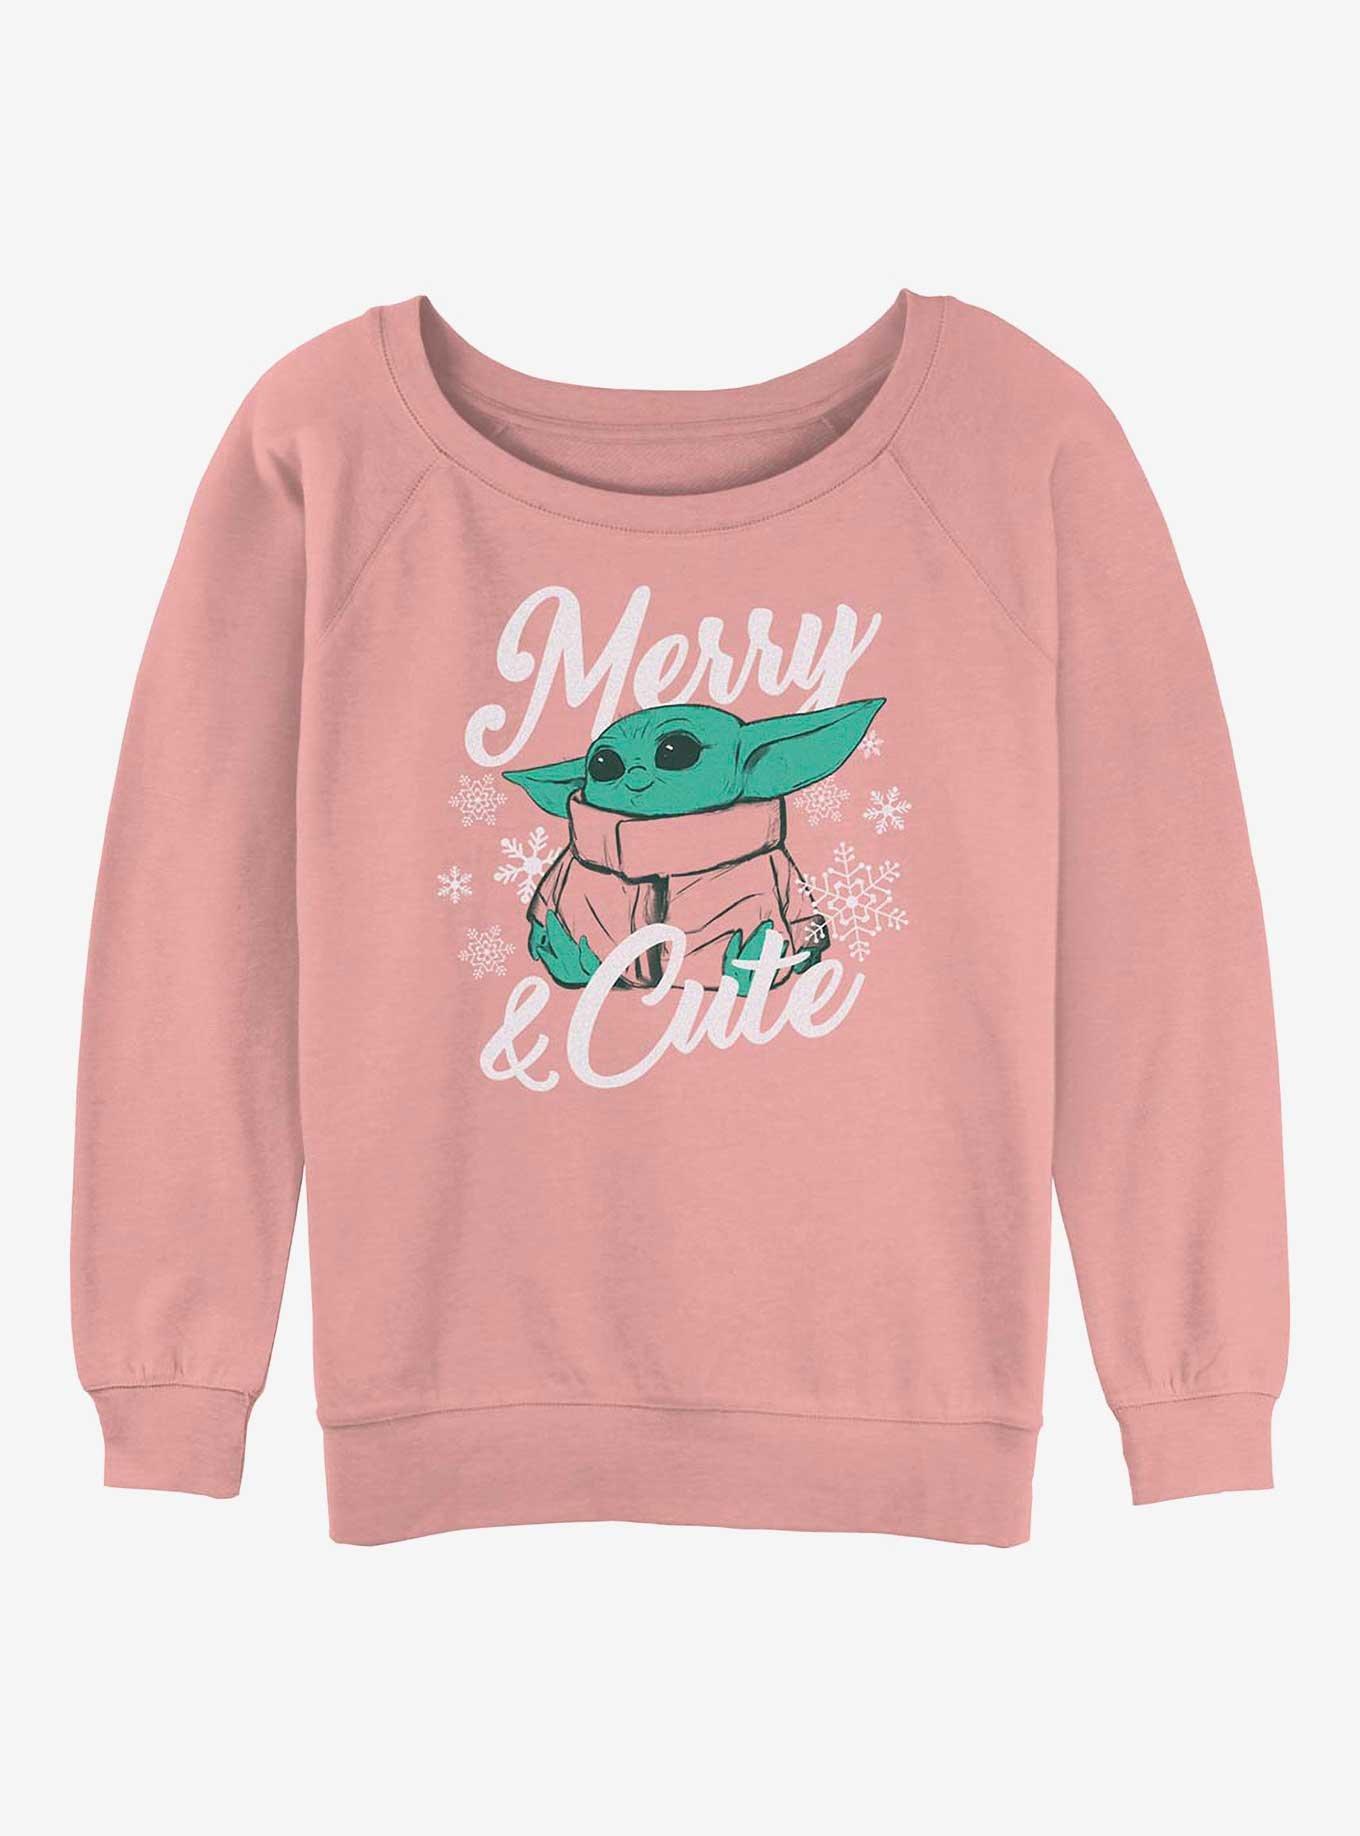 Star Wars The Mandalorian Merry and Cute Child Girls Slouchy Sweatshirt